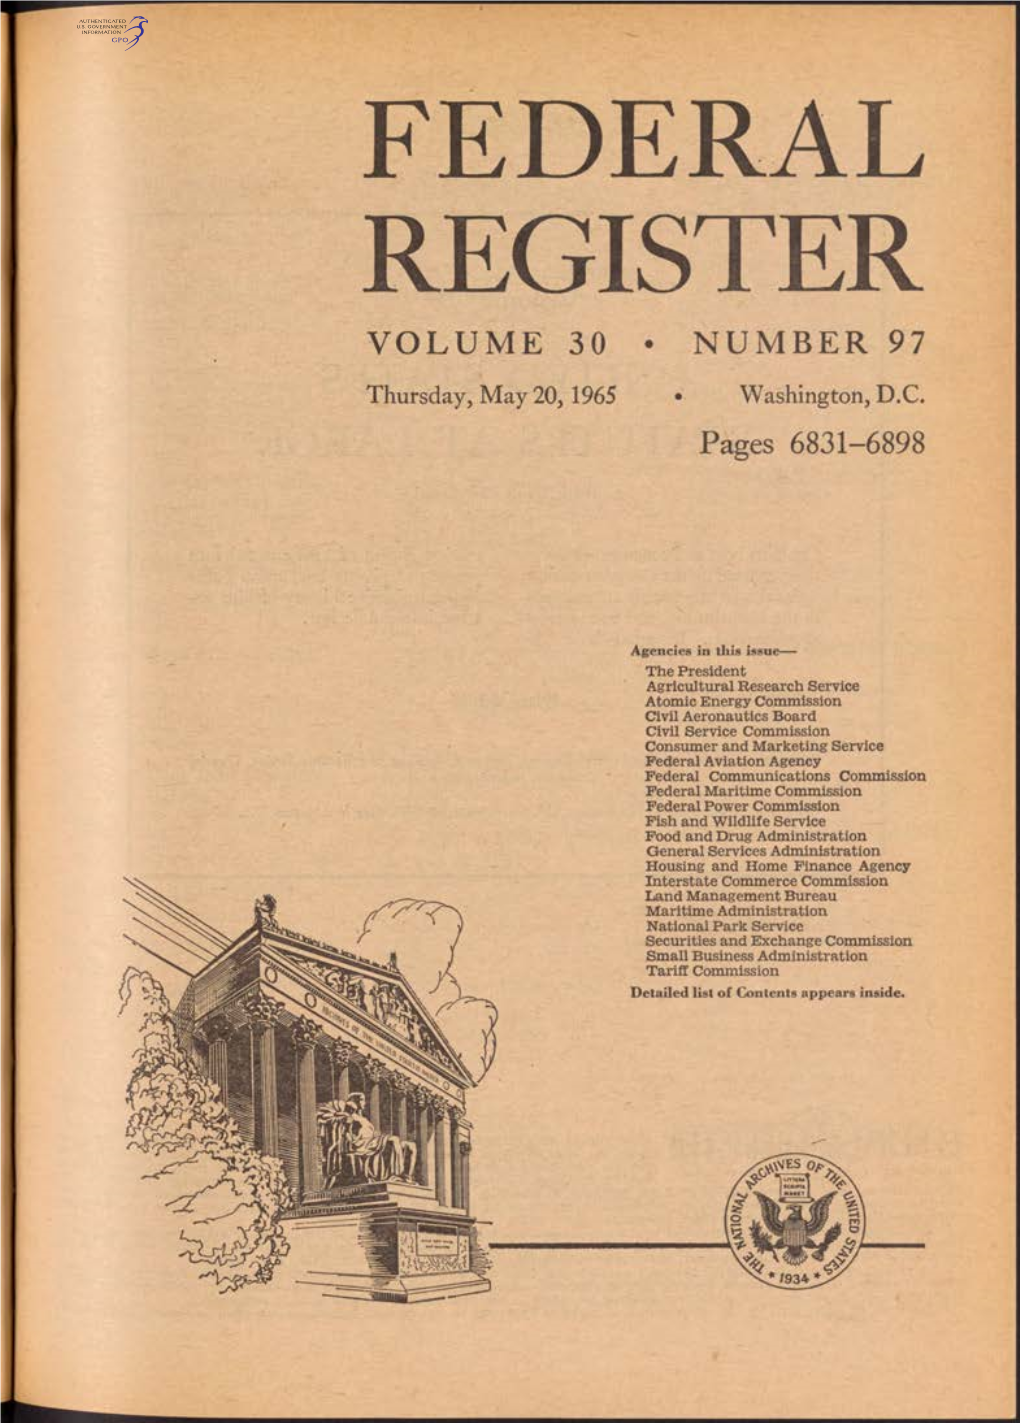 FEDERAL REGISTER VOLUME 30 * NUMBER 97 Thursday, May 20, 1965 • Washington, D.C